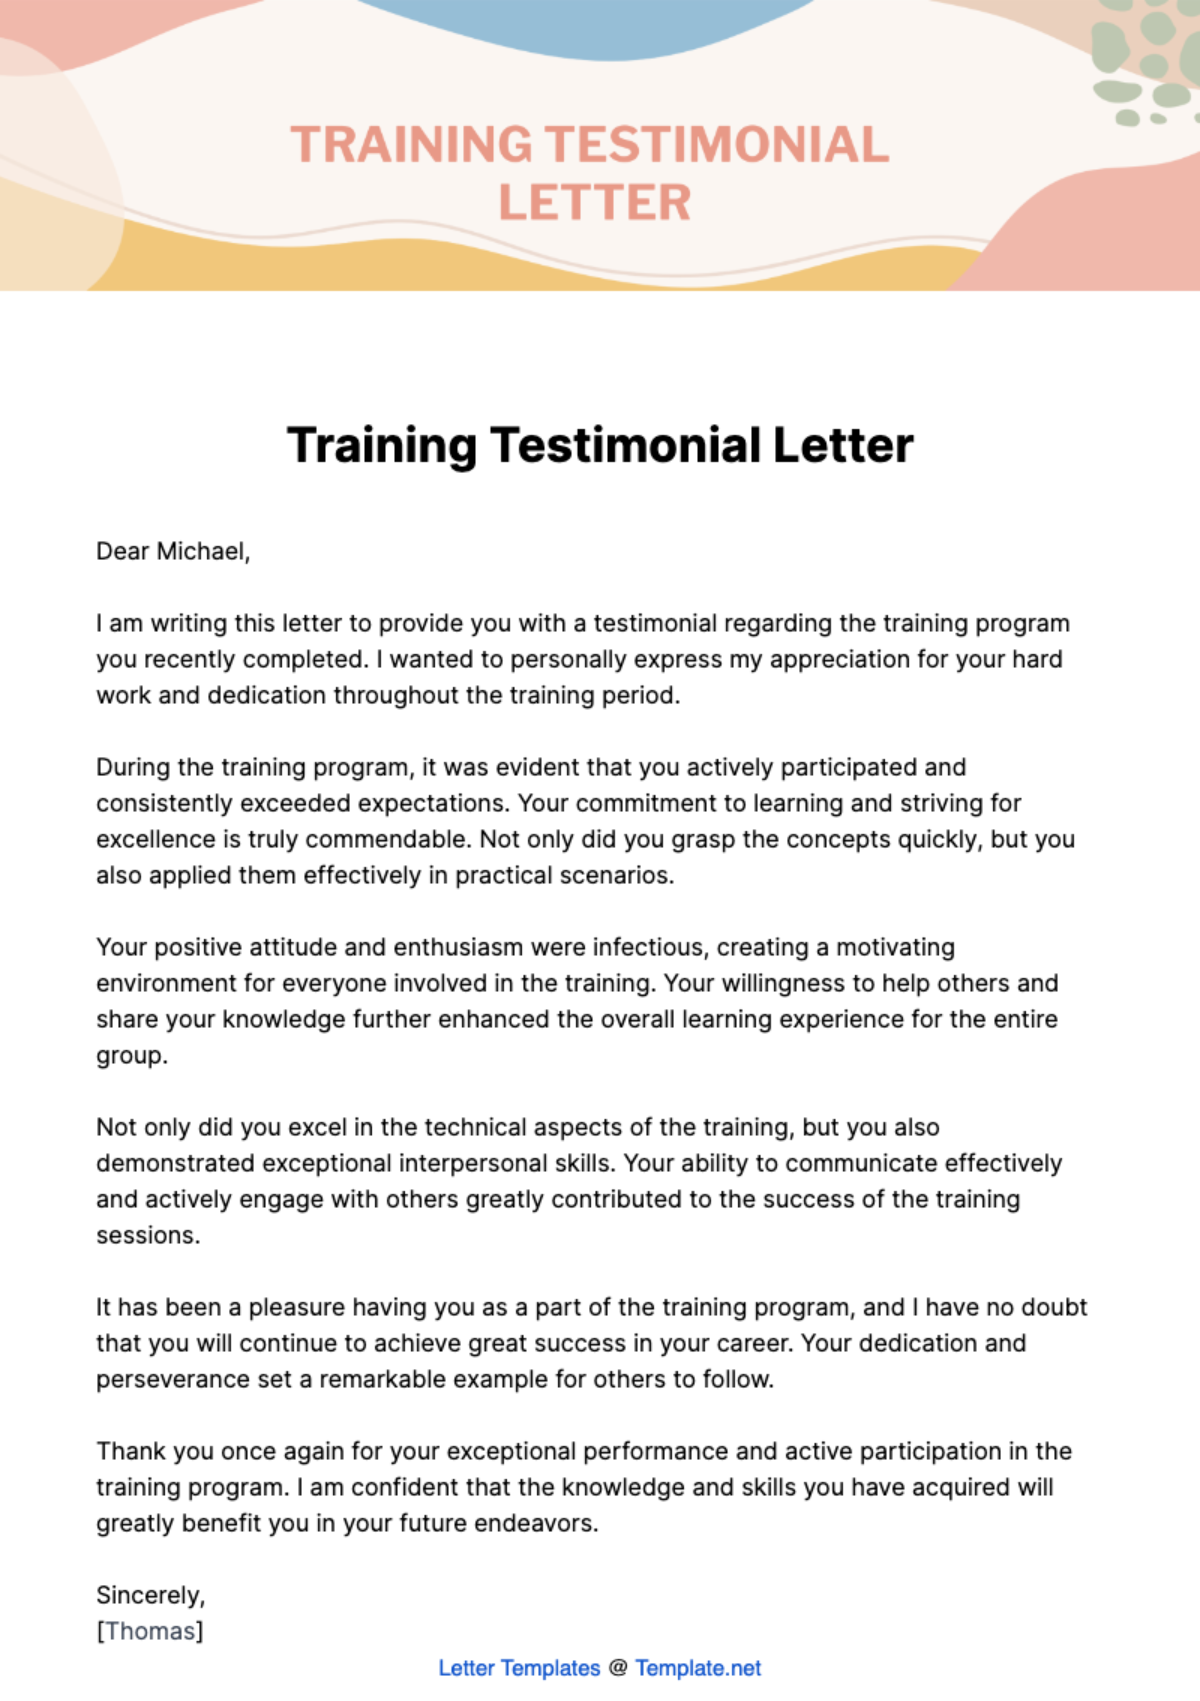 Free Training Testimonial Letter Template